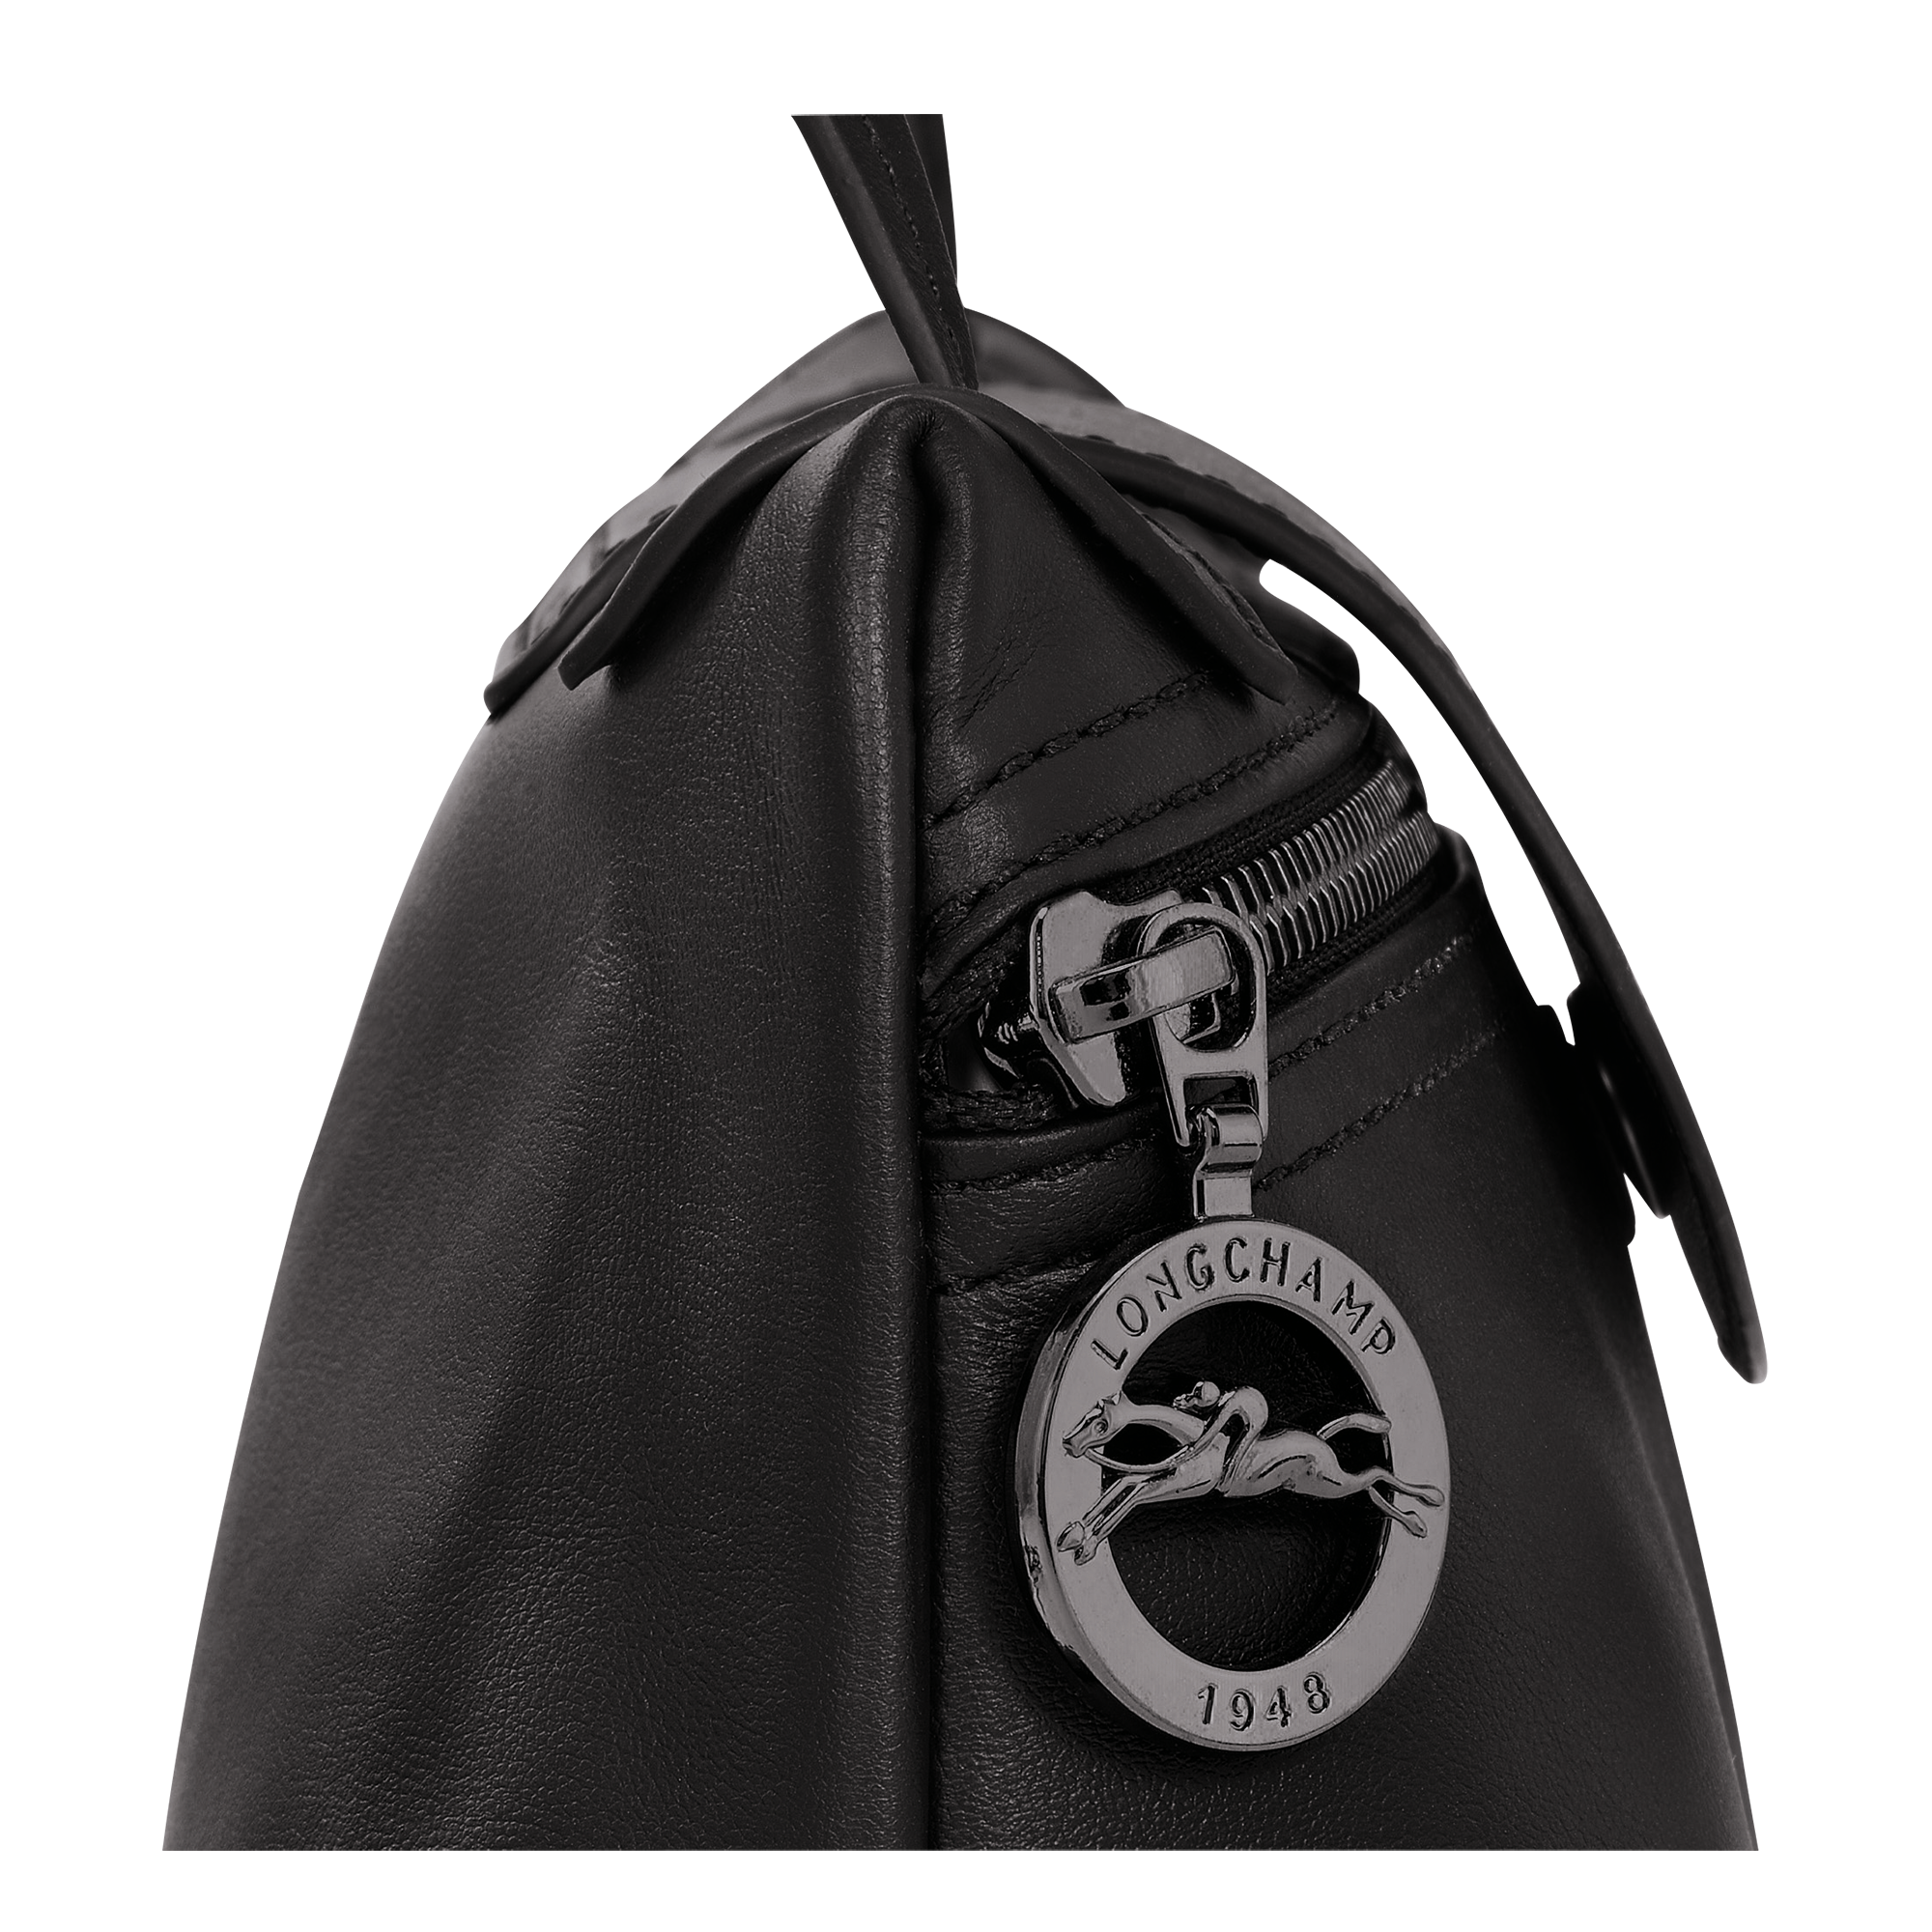 Le Pliage Xtra Crossbody bag, Black